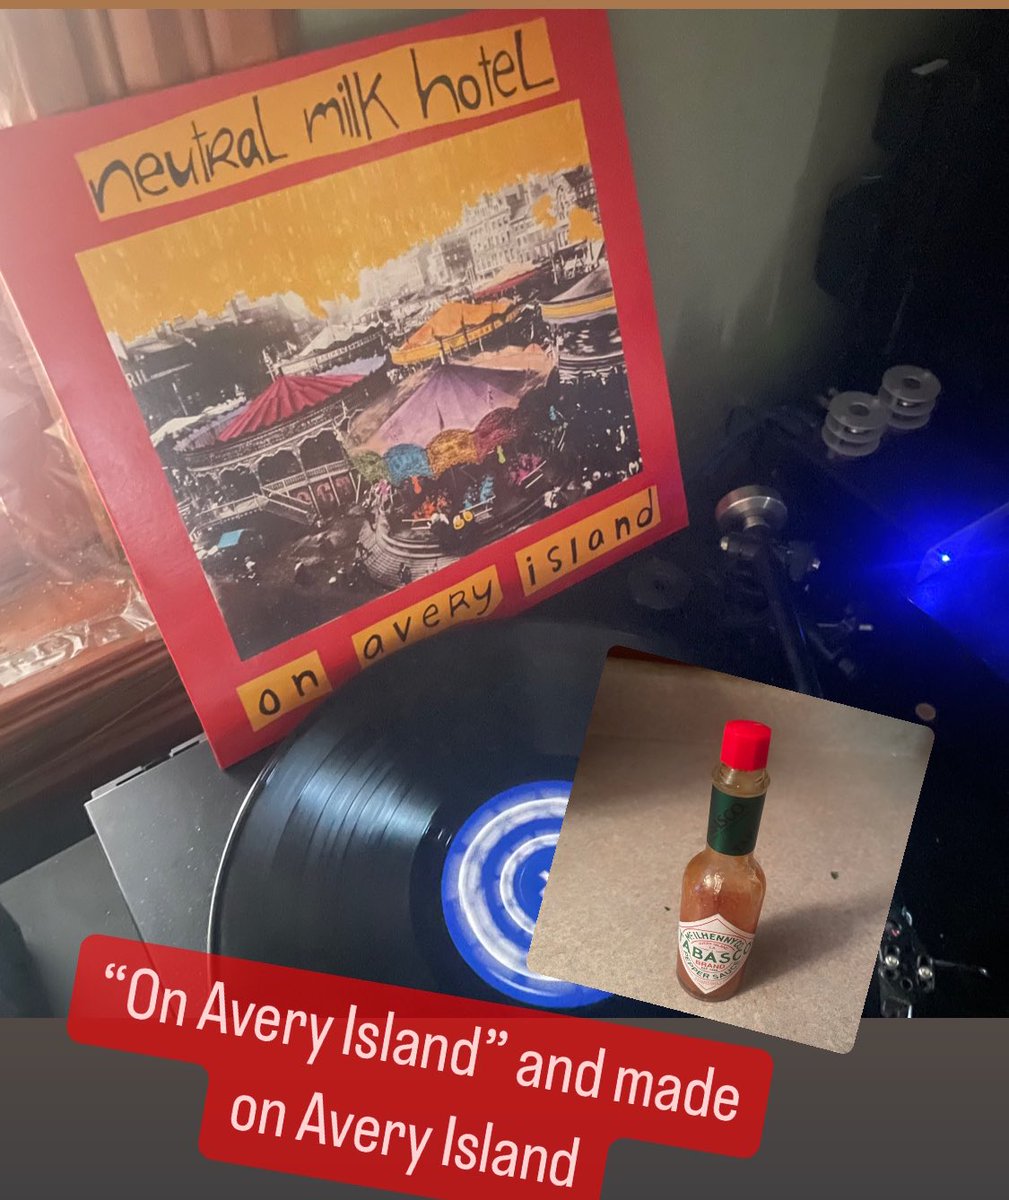 🥛 On Avery Island and made on Avery Island #neutralmilkhotel #averyisland #onaveryisland #tobasco #theOG 🌶️